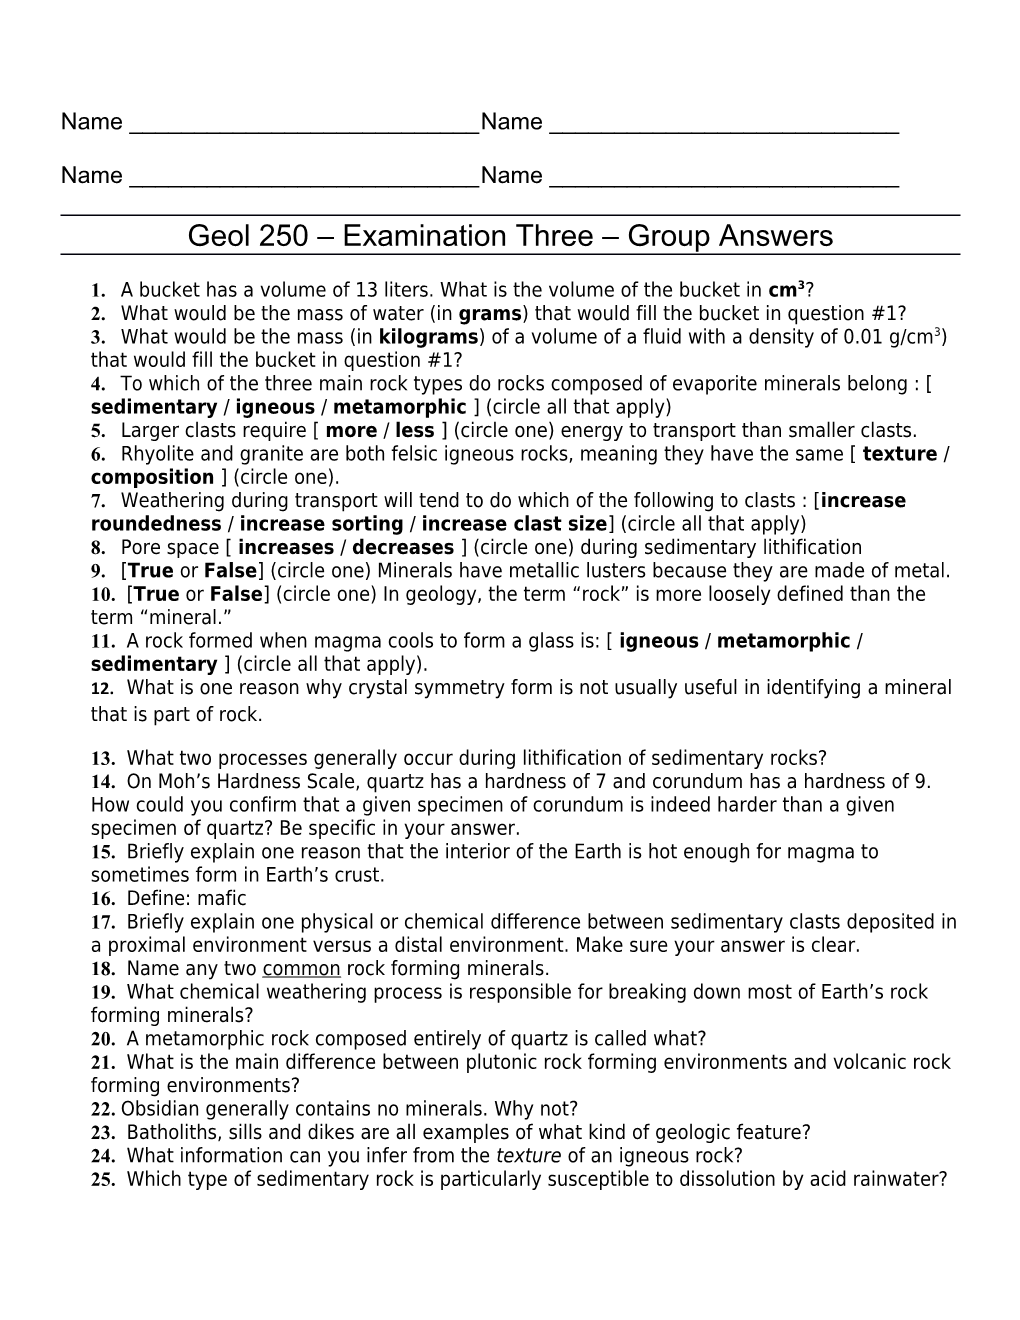 Geol 250 Examination Three Group Answers